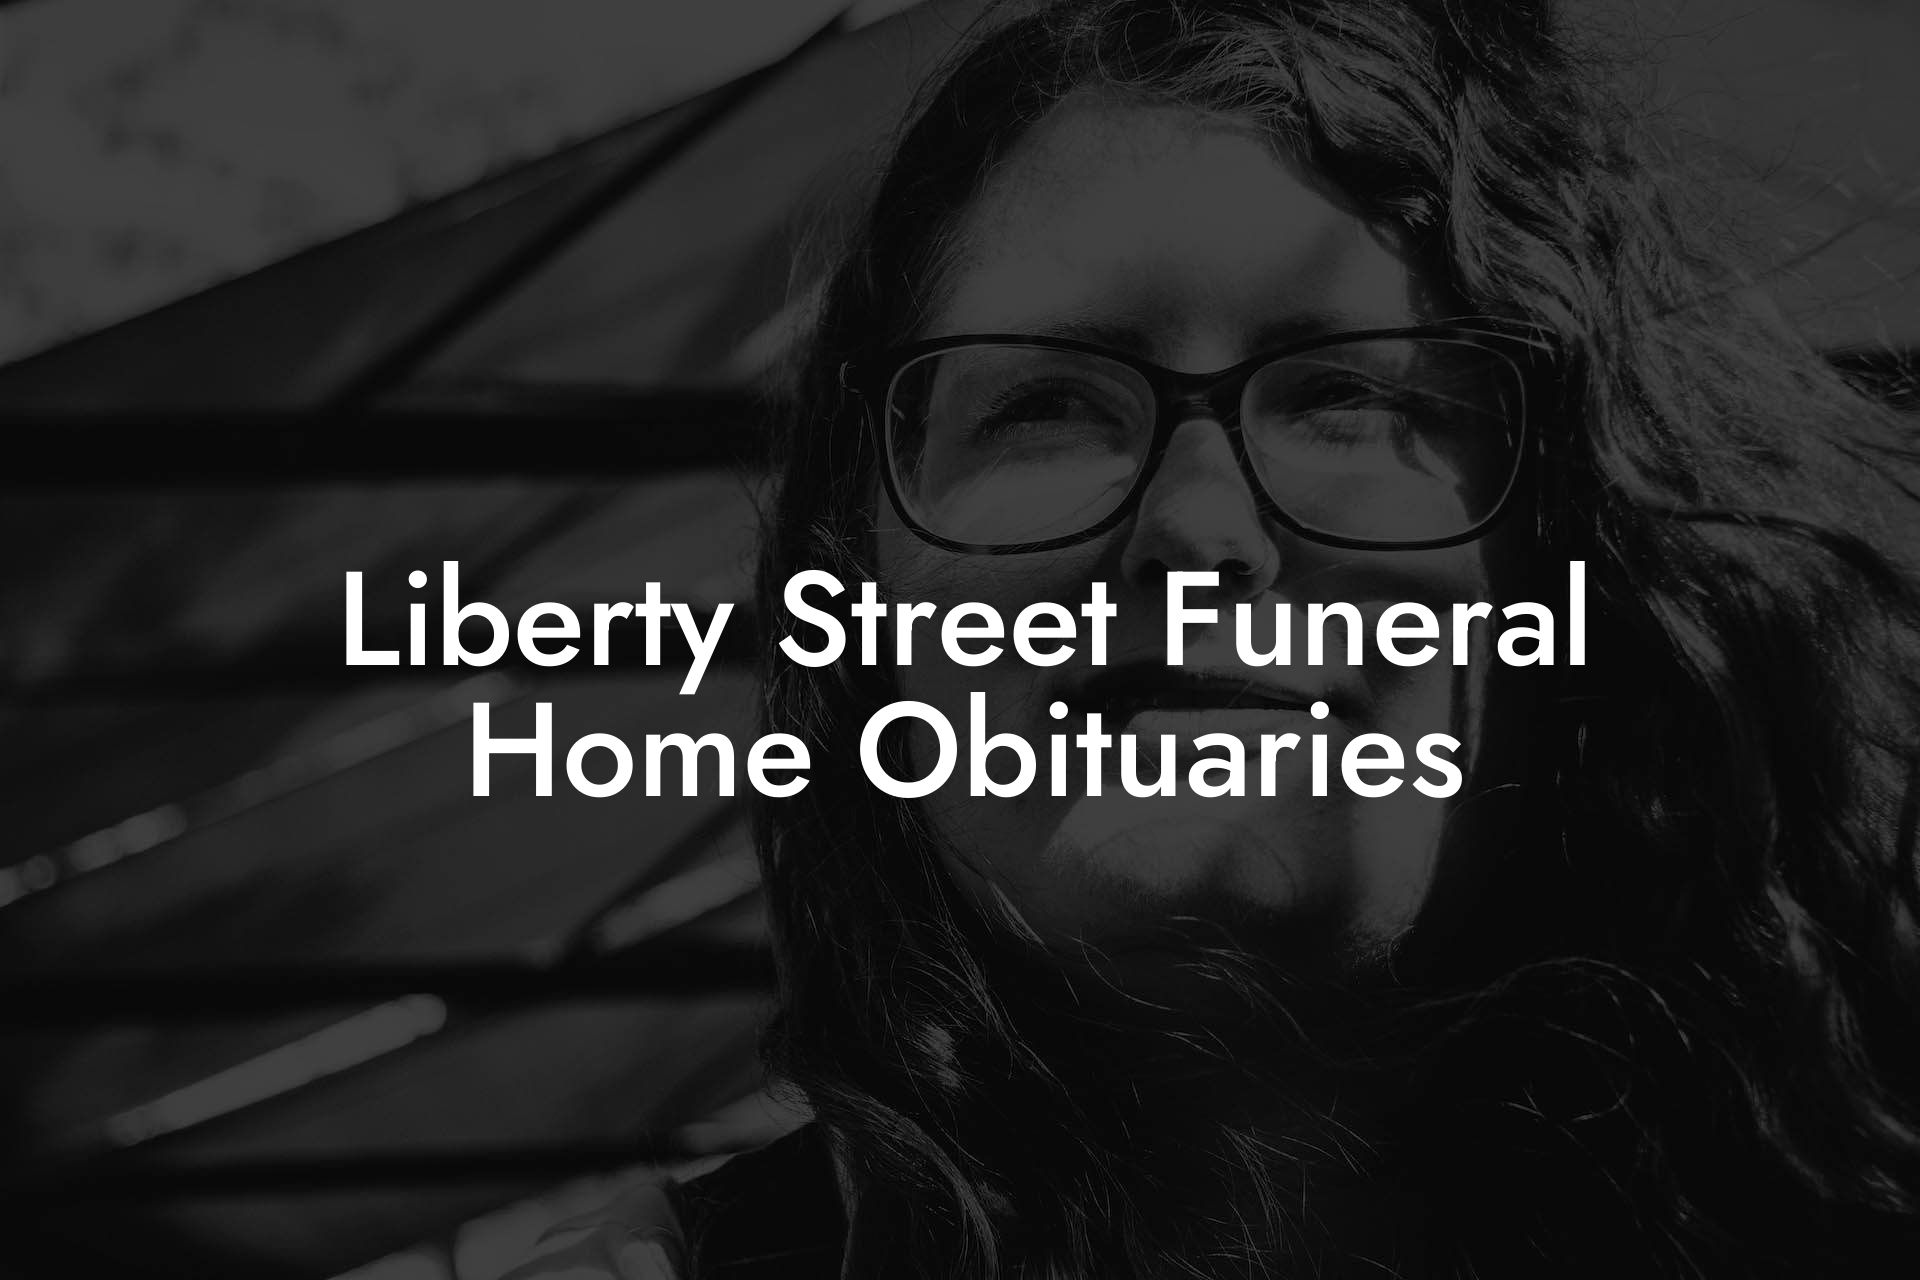 Liberty Street Funeral Home Obituaries